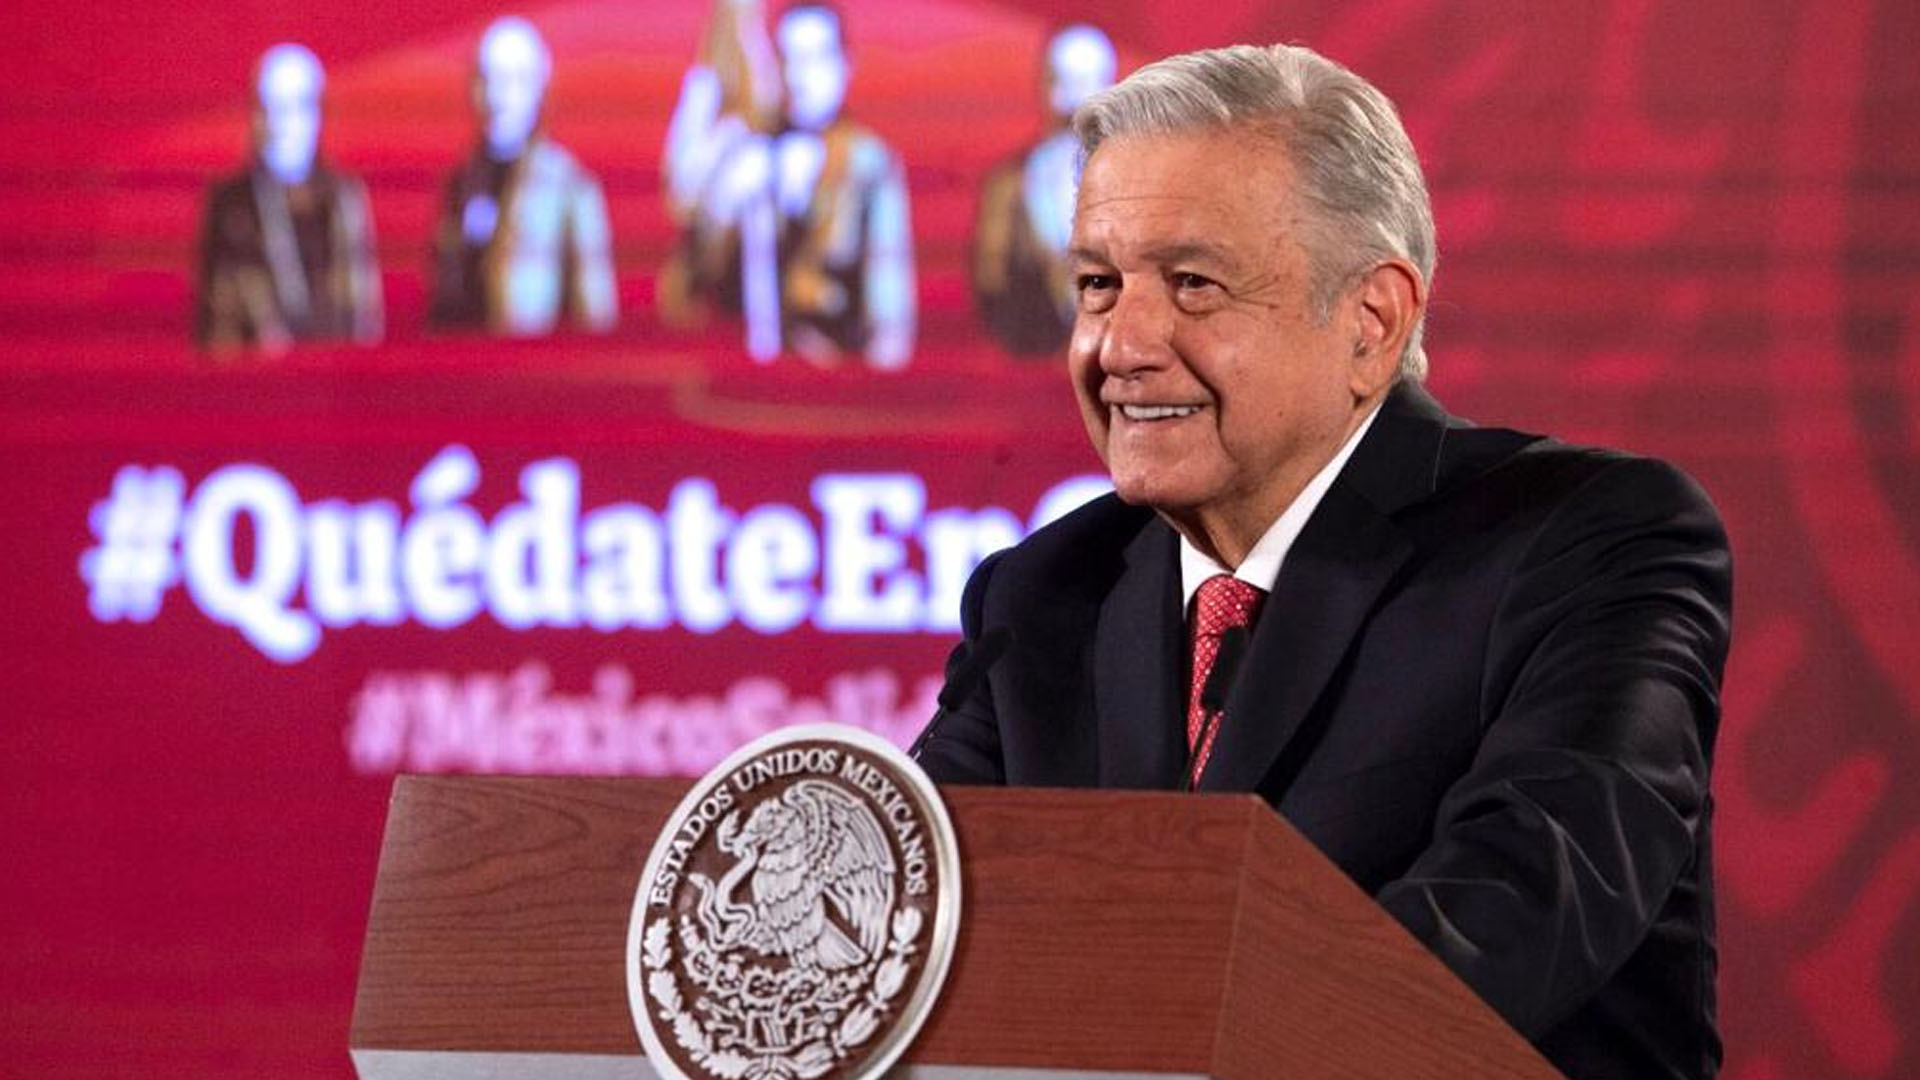 “Yo pensaba que era una exquisitez de la burguesía”: López Obrador descubrió que el estrés “sí existe”